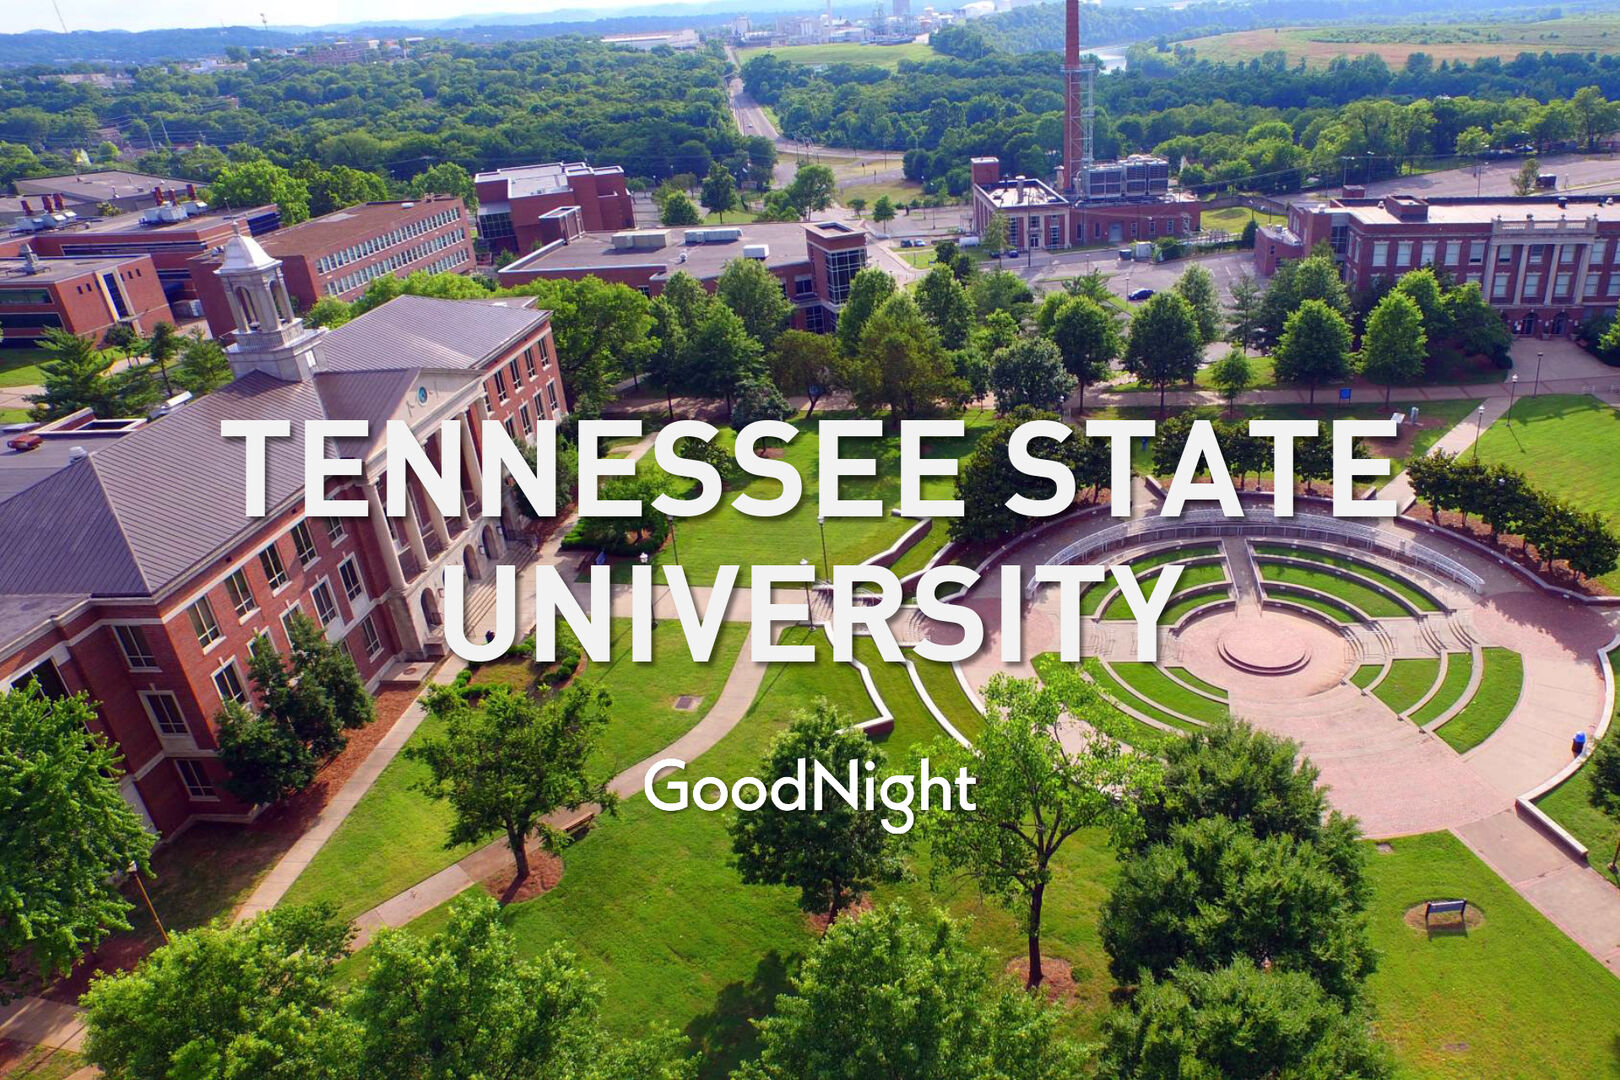 11 mins: Tennessee State University